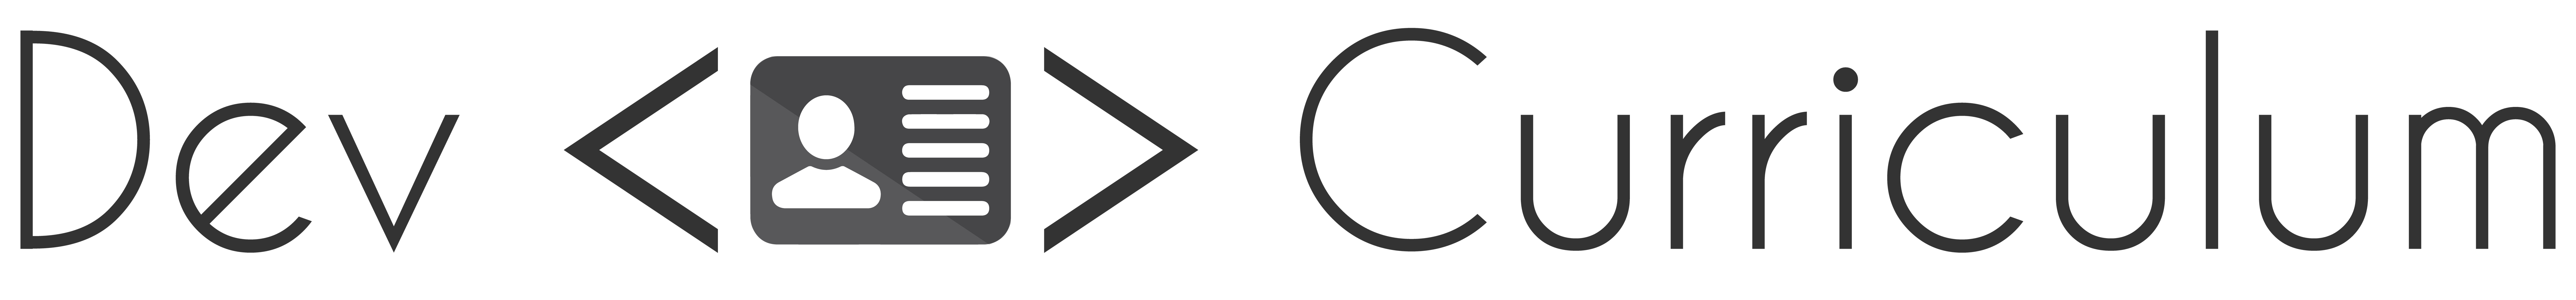 Dev Curriculum logo